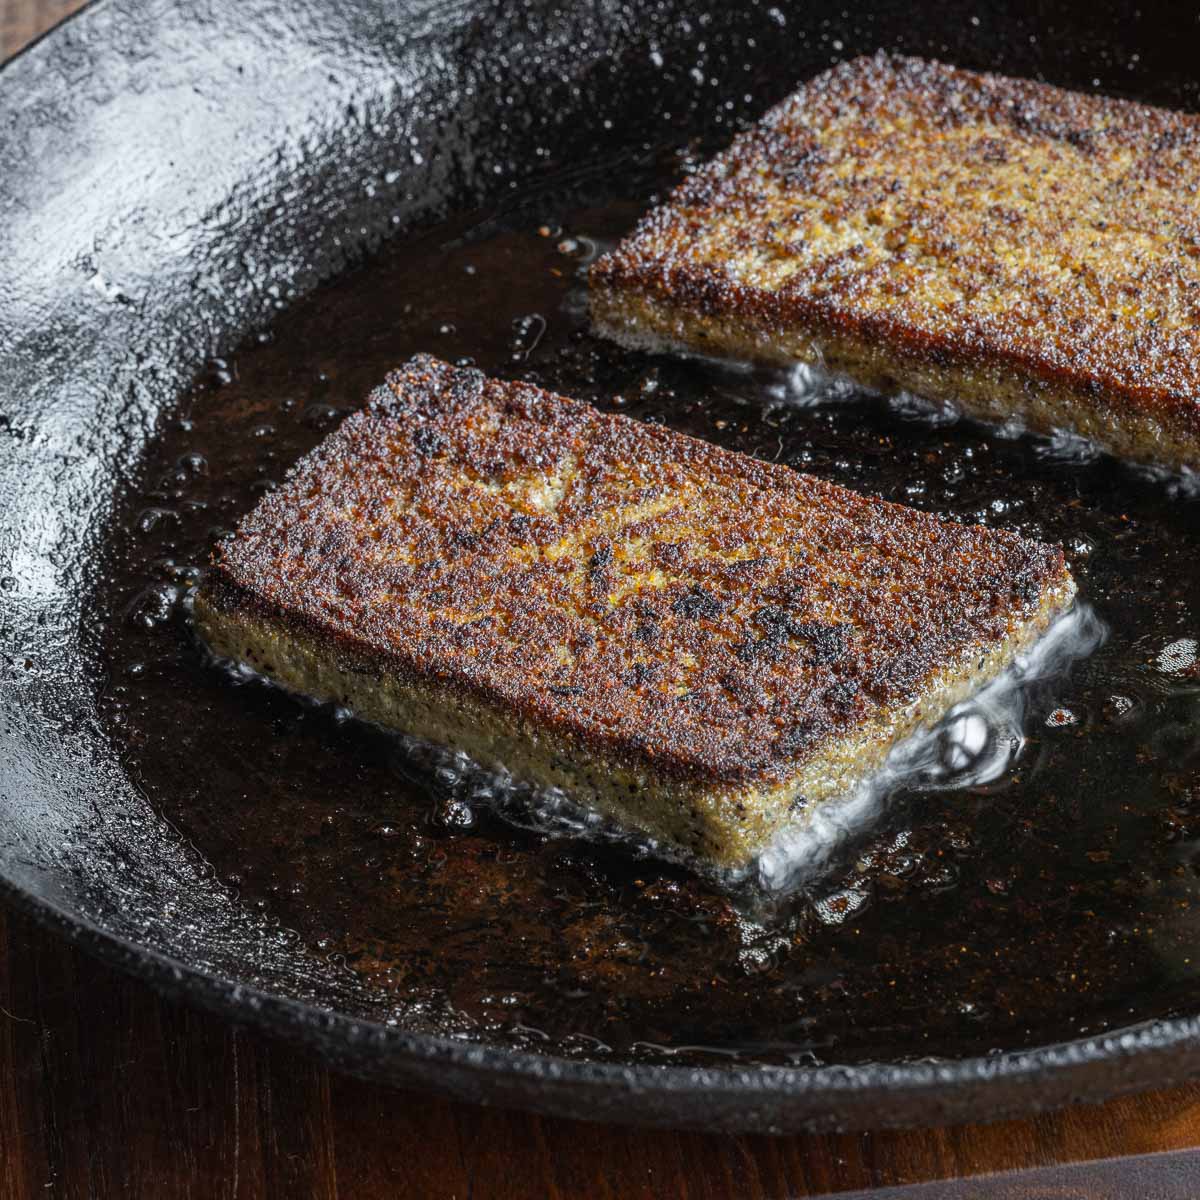 Golden brown scrapple fried in a pan.